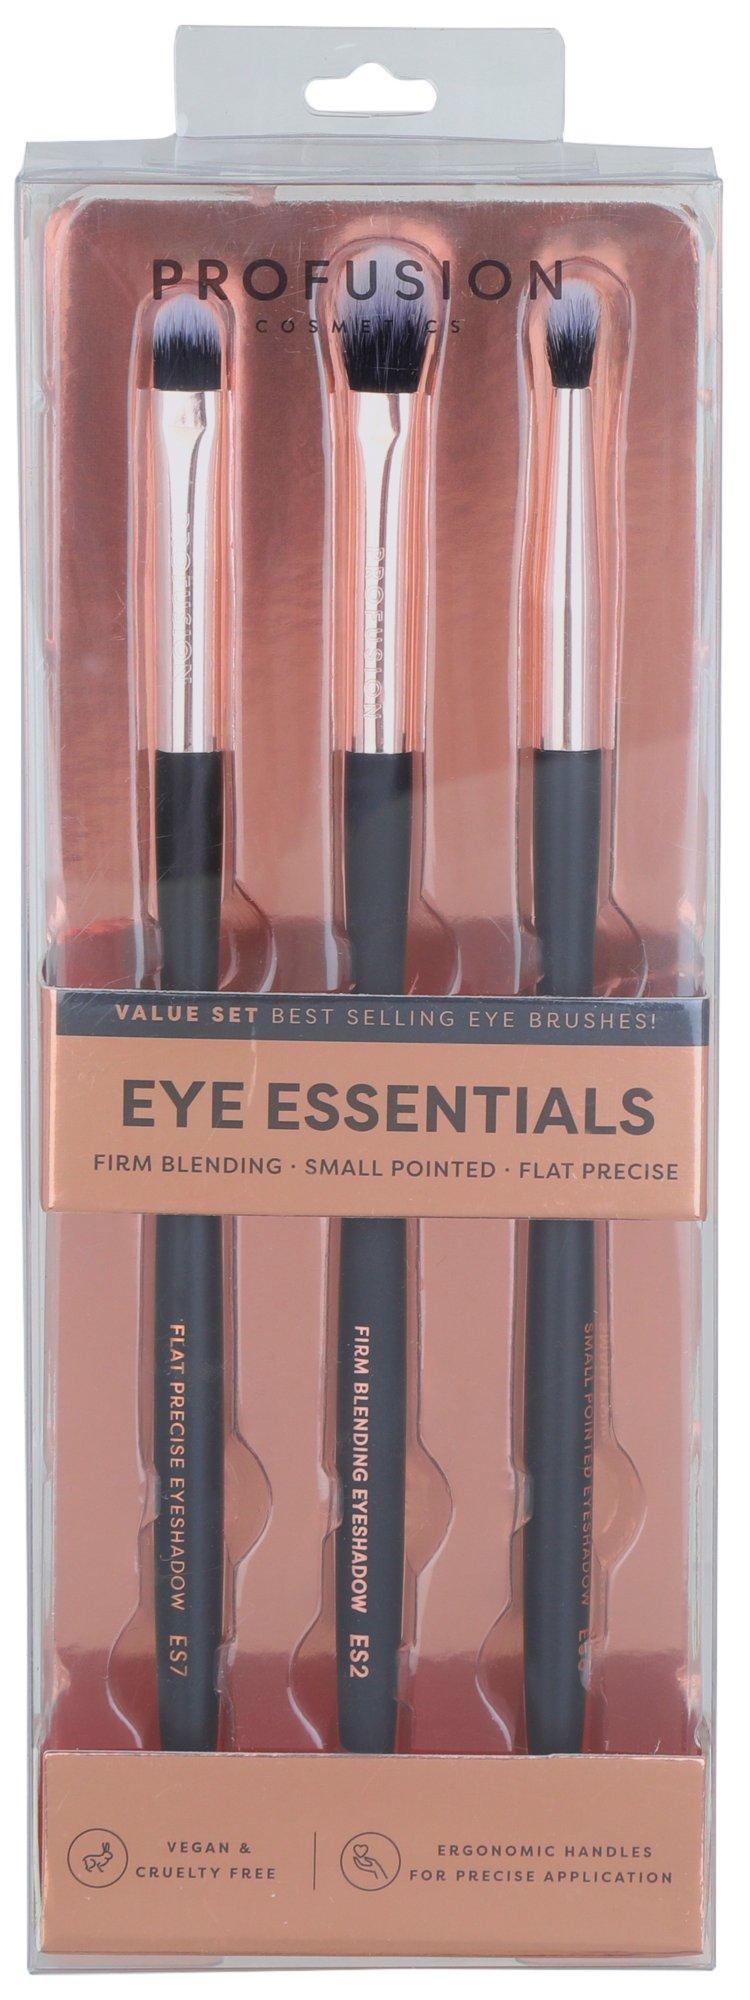 Profusion 3-Pc. Eye Essentials Makeup Brush Set